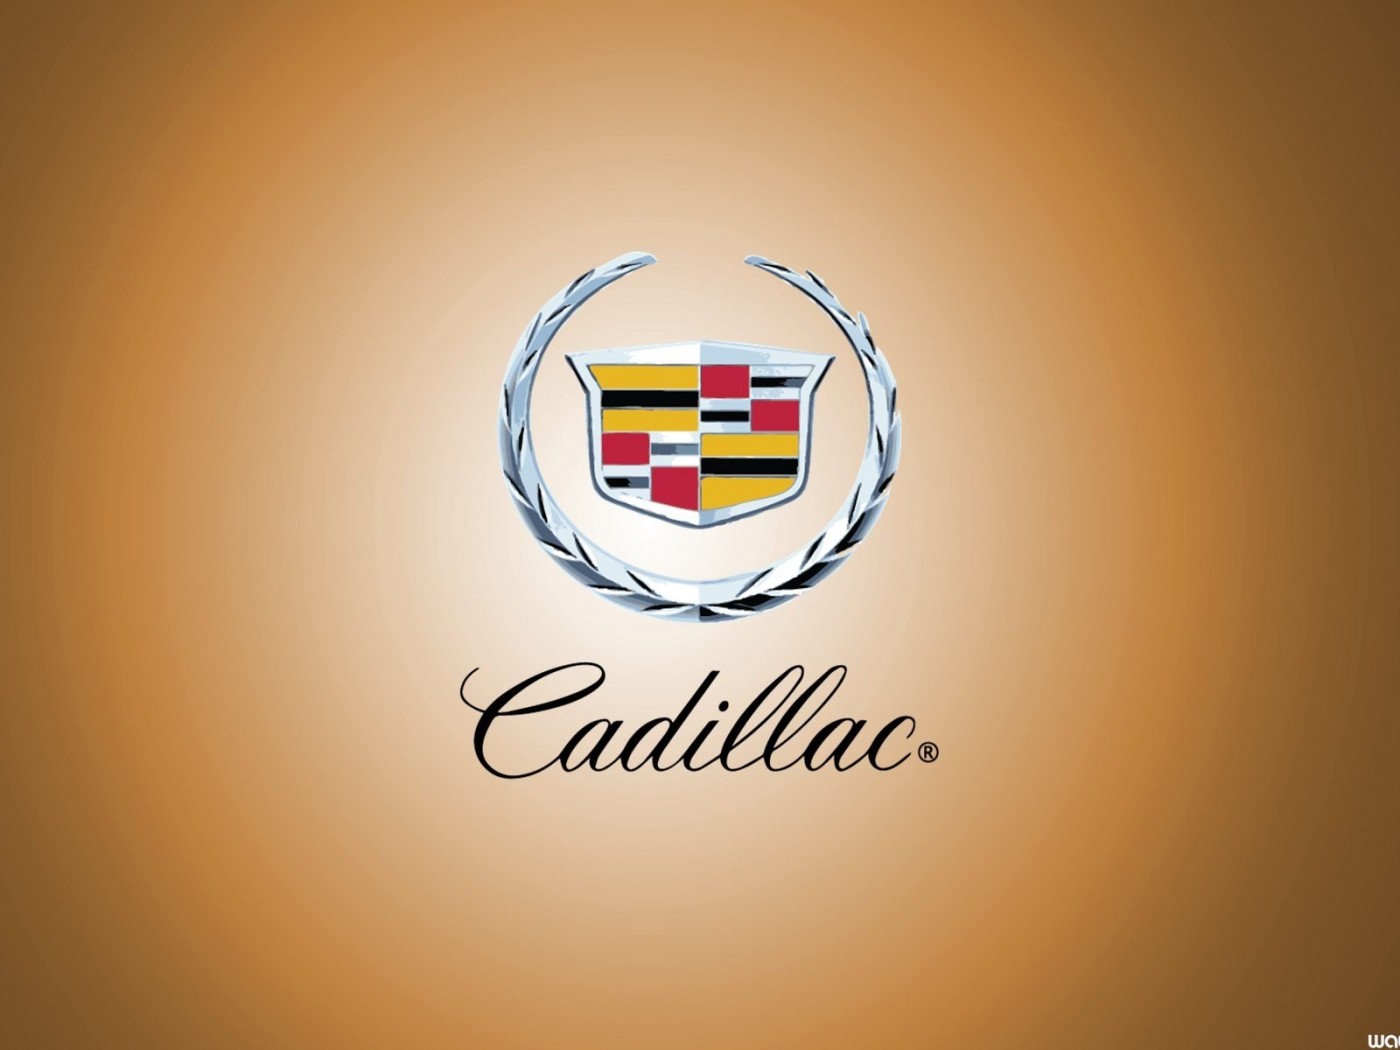 Cadillac And V Logos Symbol The Emblem Is